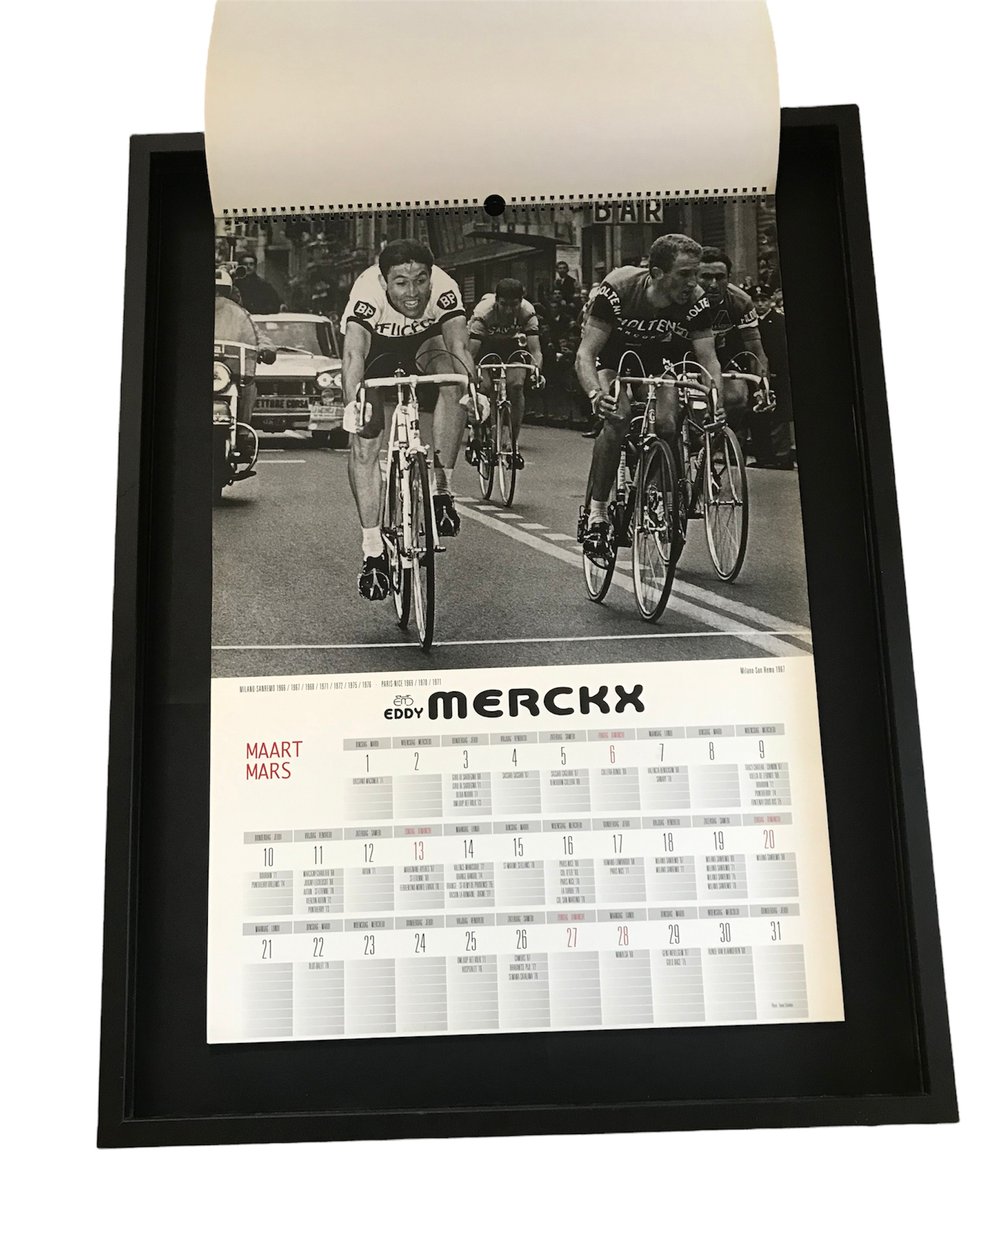  25th Anniversary Eddy Merckx calendar from 1980 beginnings in frame building.